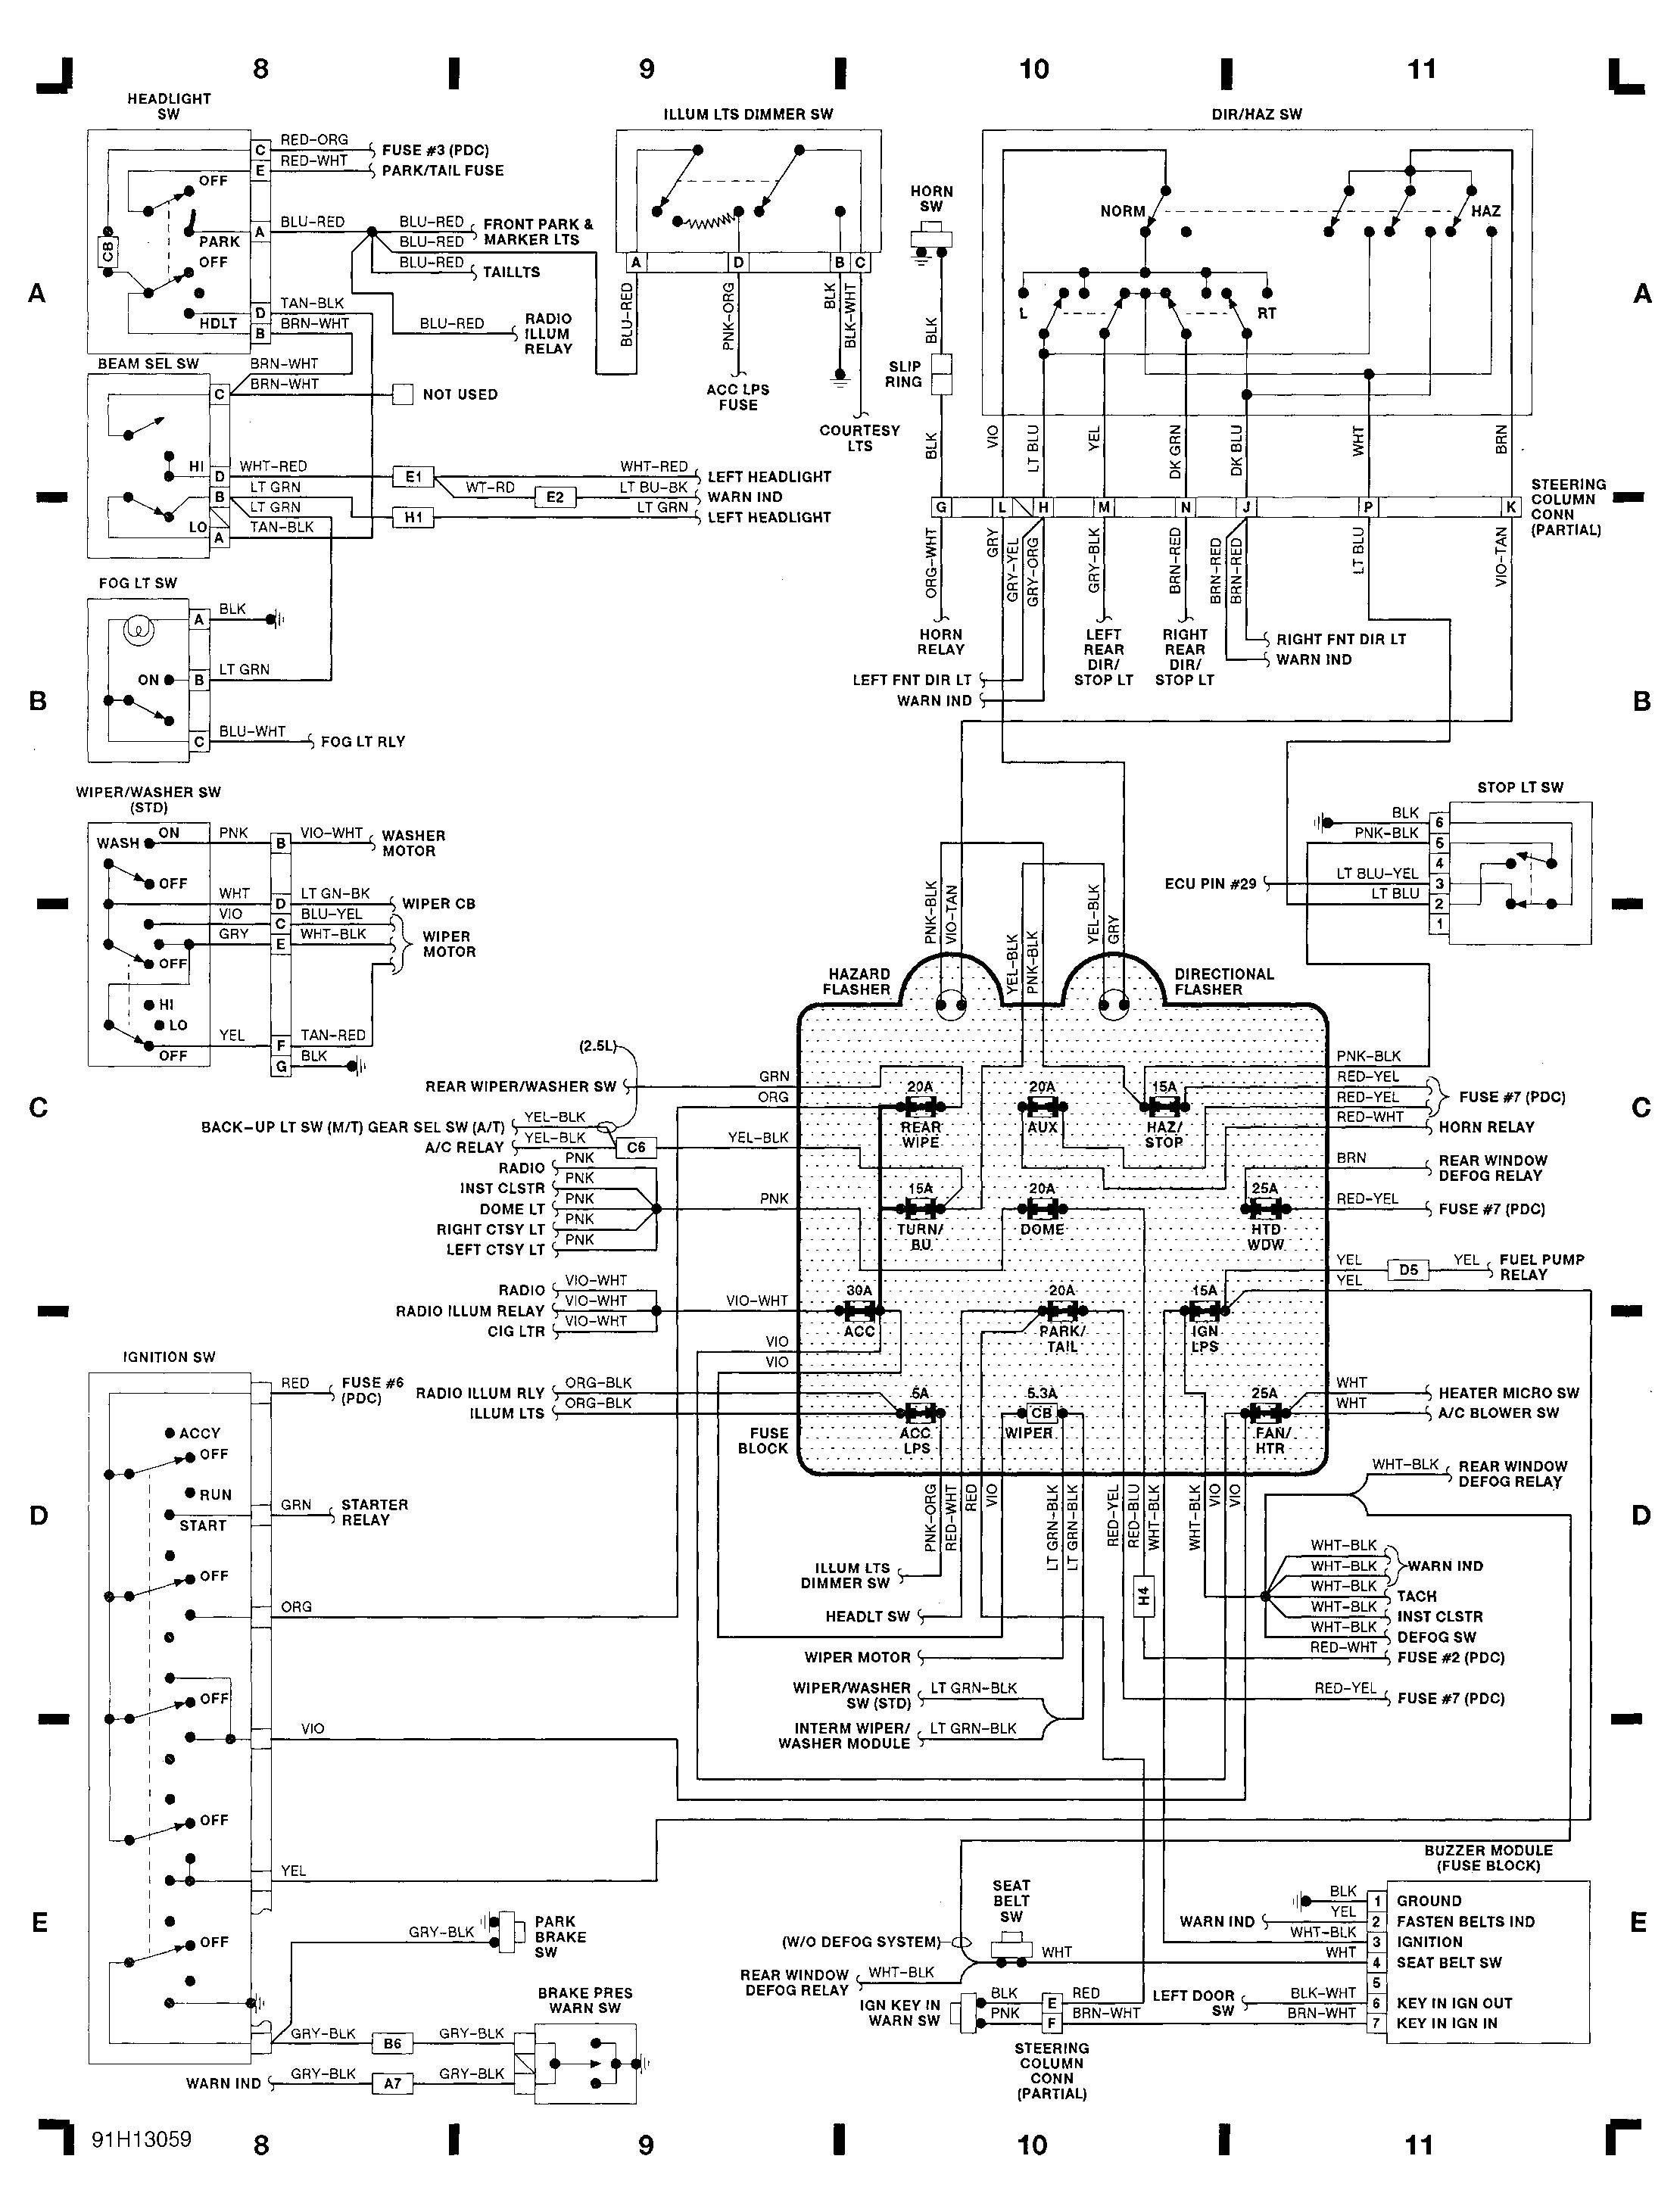 wiring diagram jeep wrangler yj wiring diagram fascinating 1991 jeep wrangler 4 0 wiring diagram 1991 jeep wrangler wiring diagram